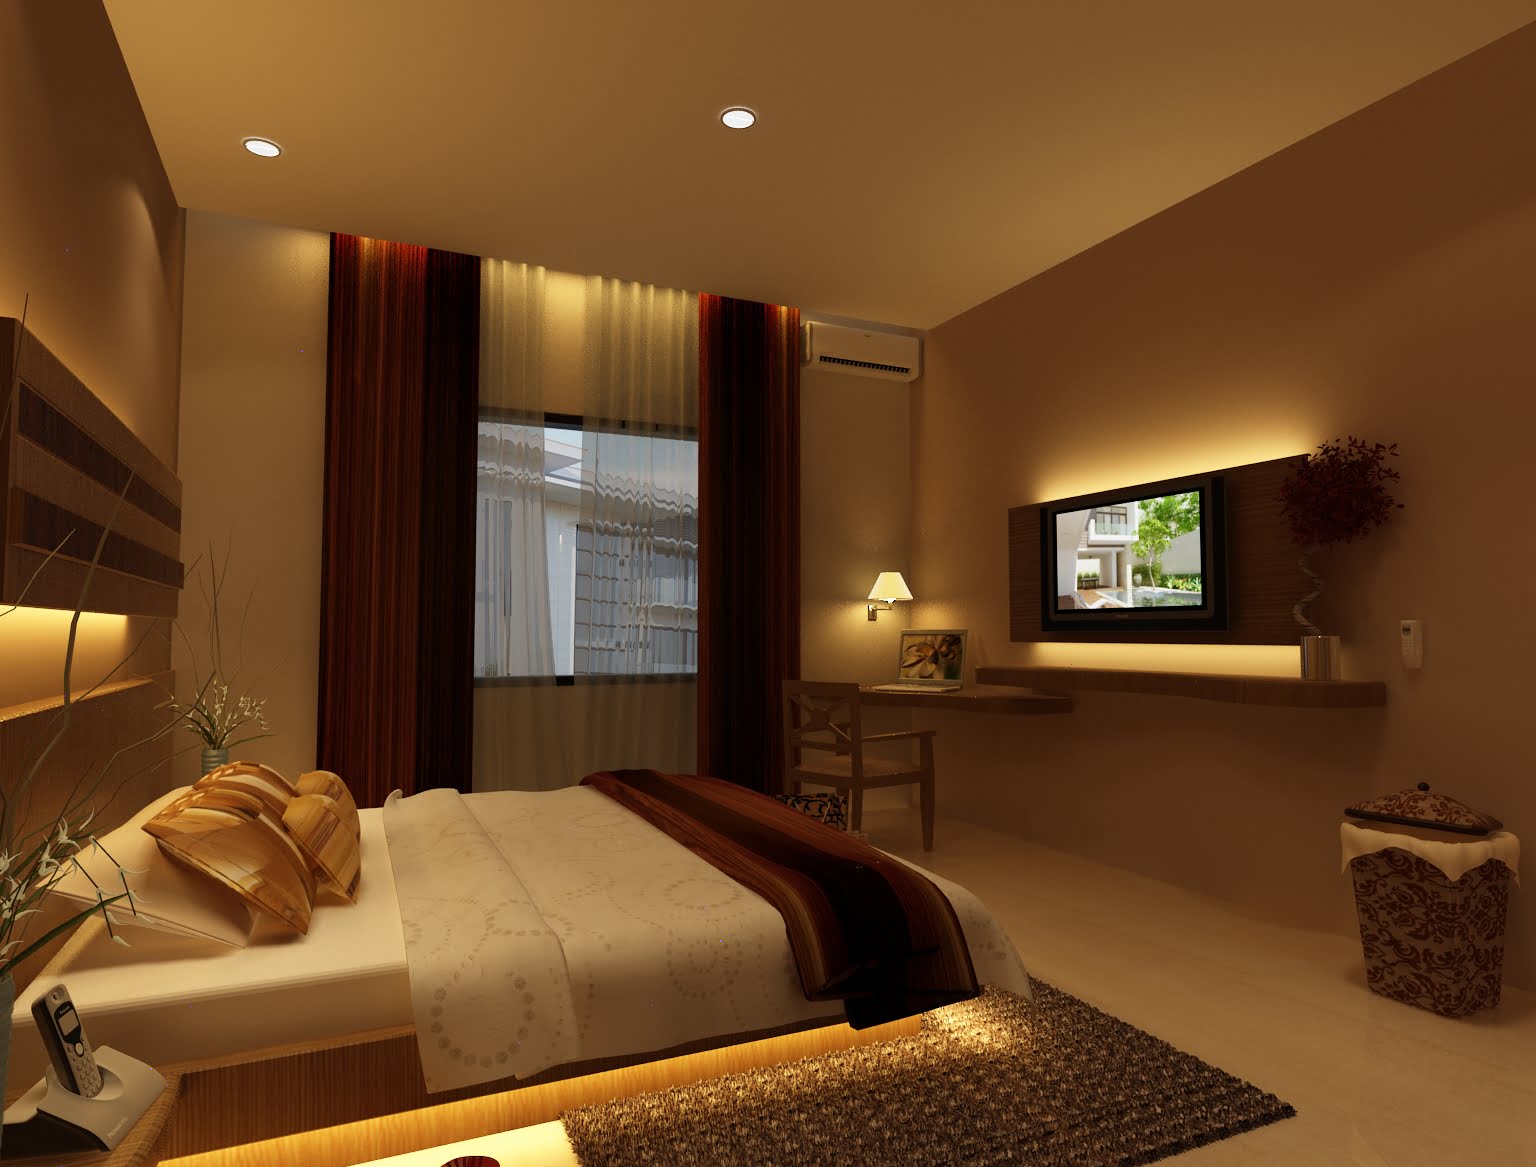 74 Ide Cantik Desain Kamar Minimalis Seperti Hotel Istimewa Banget